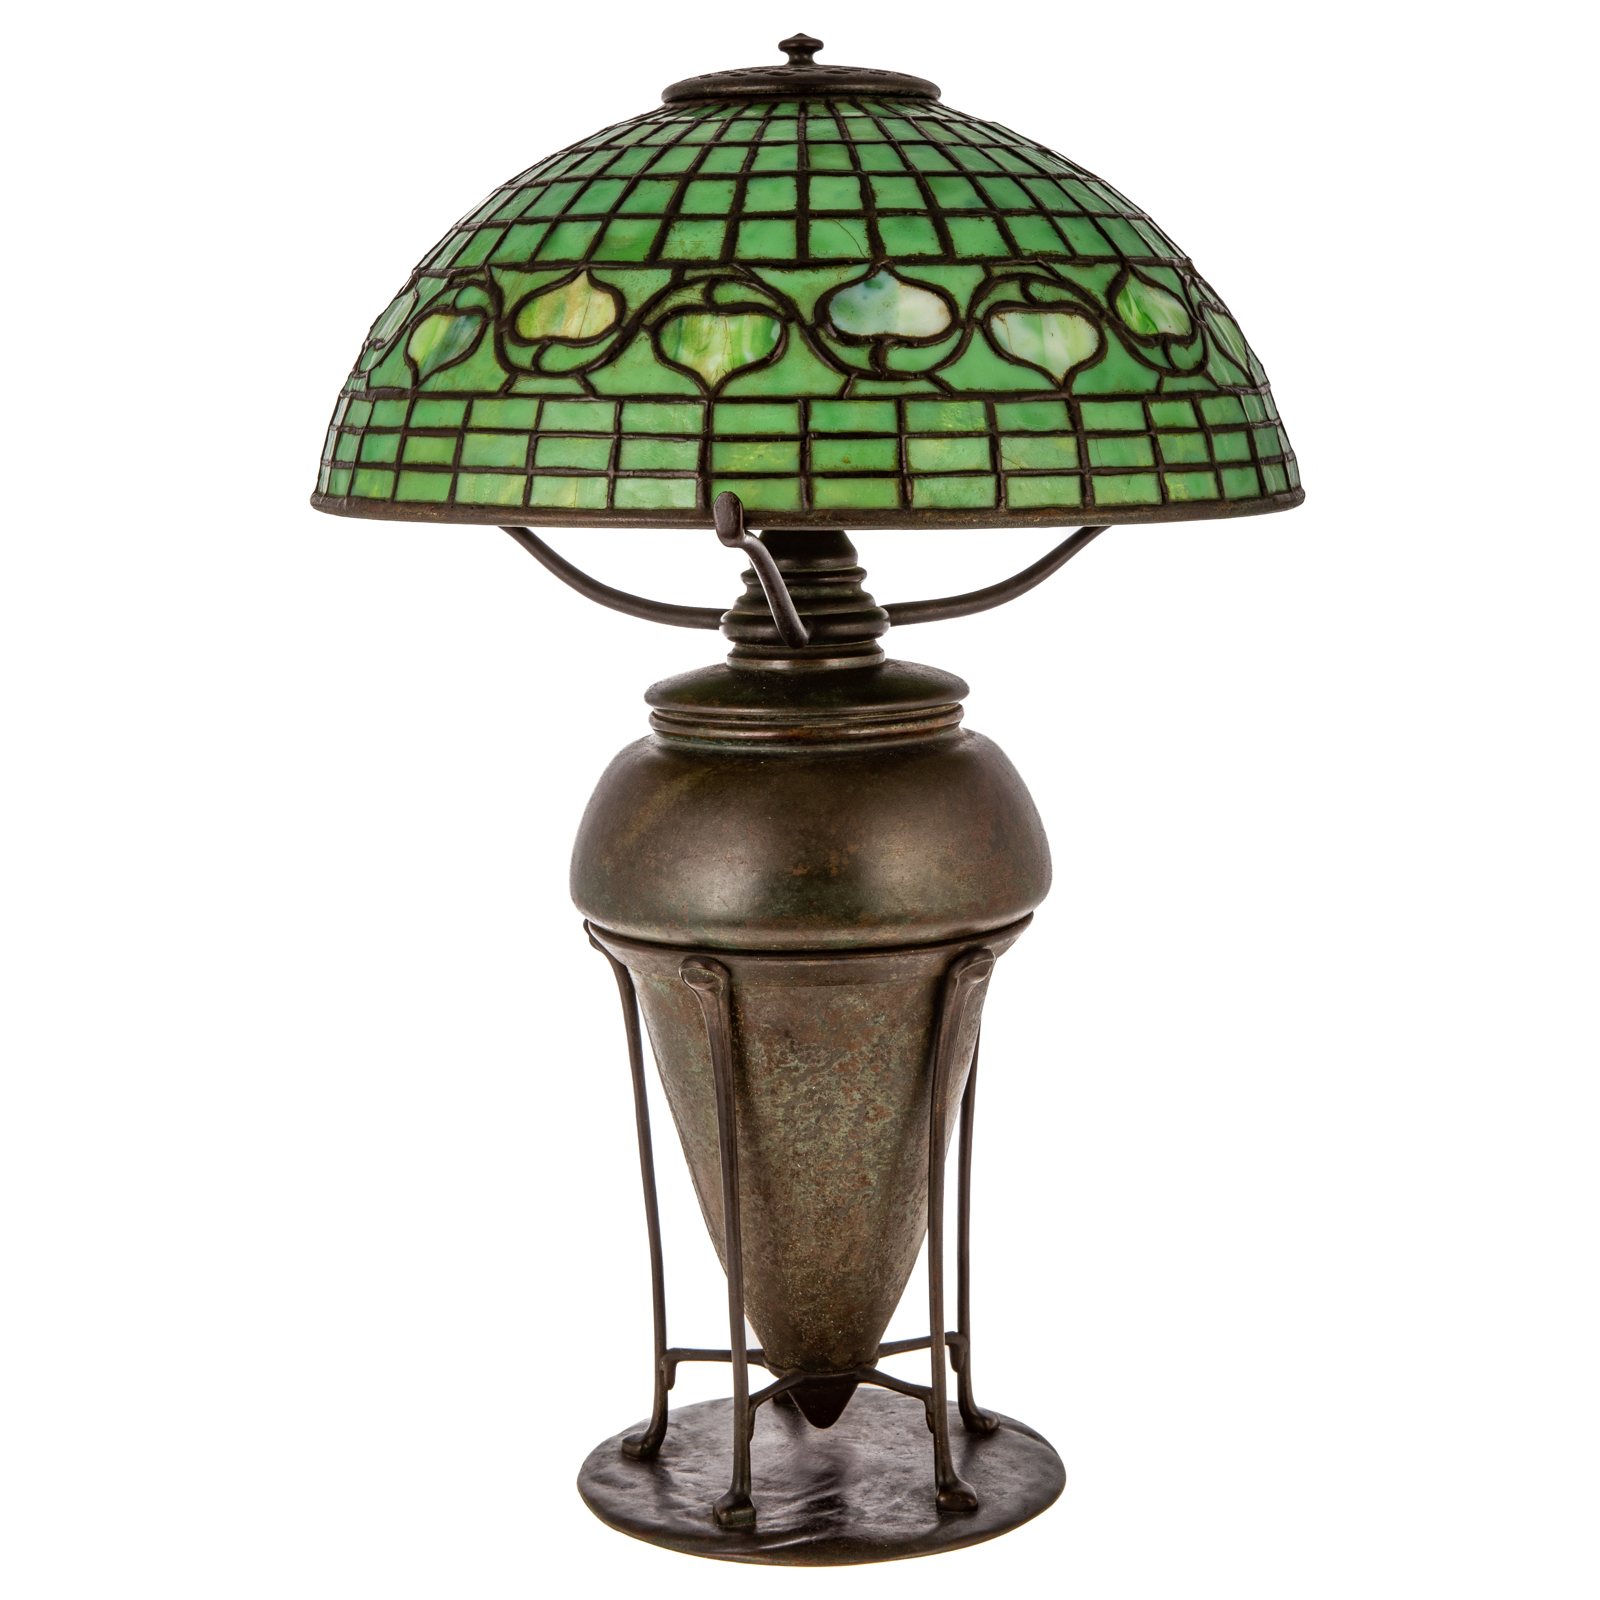 TIFFANY ACORN TABLE LAMP Circa 1905-10;